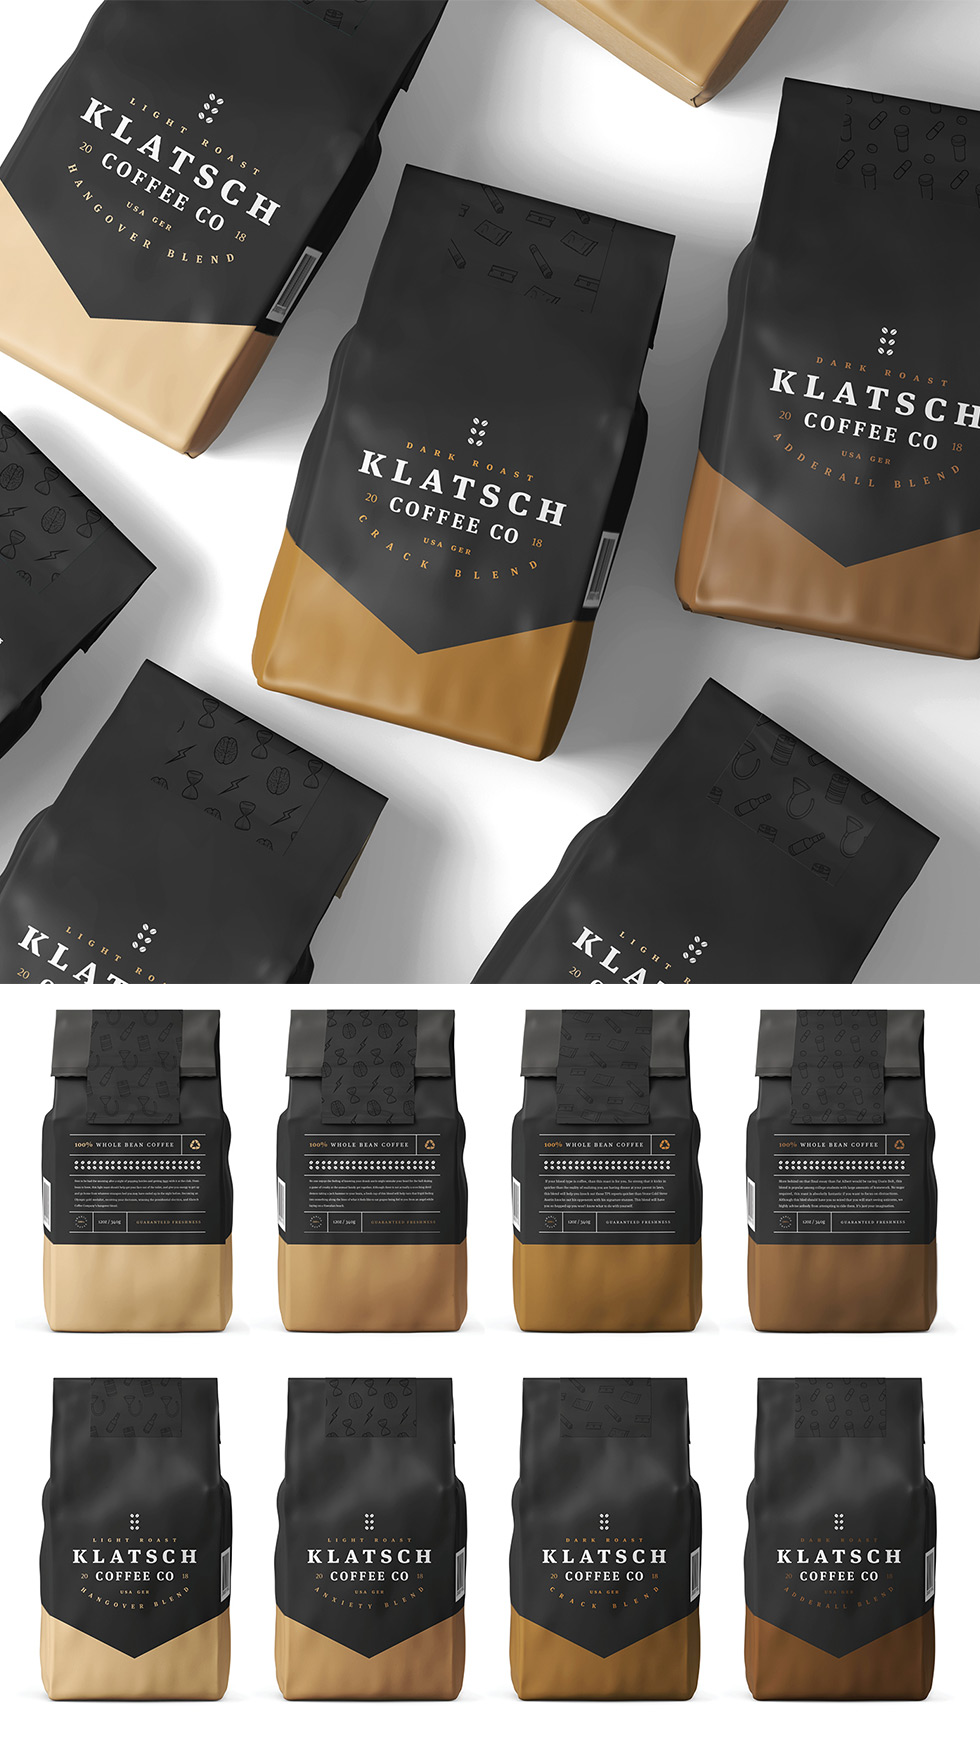 Coffee Packaging Design - Klatsch Coffee Co.